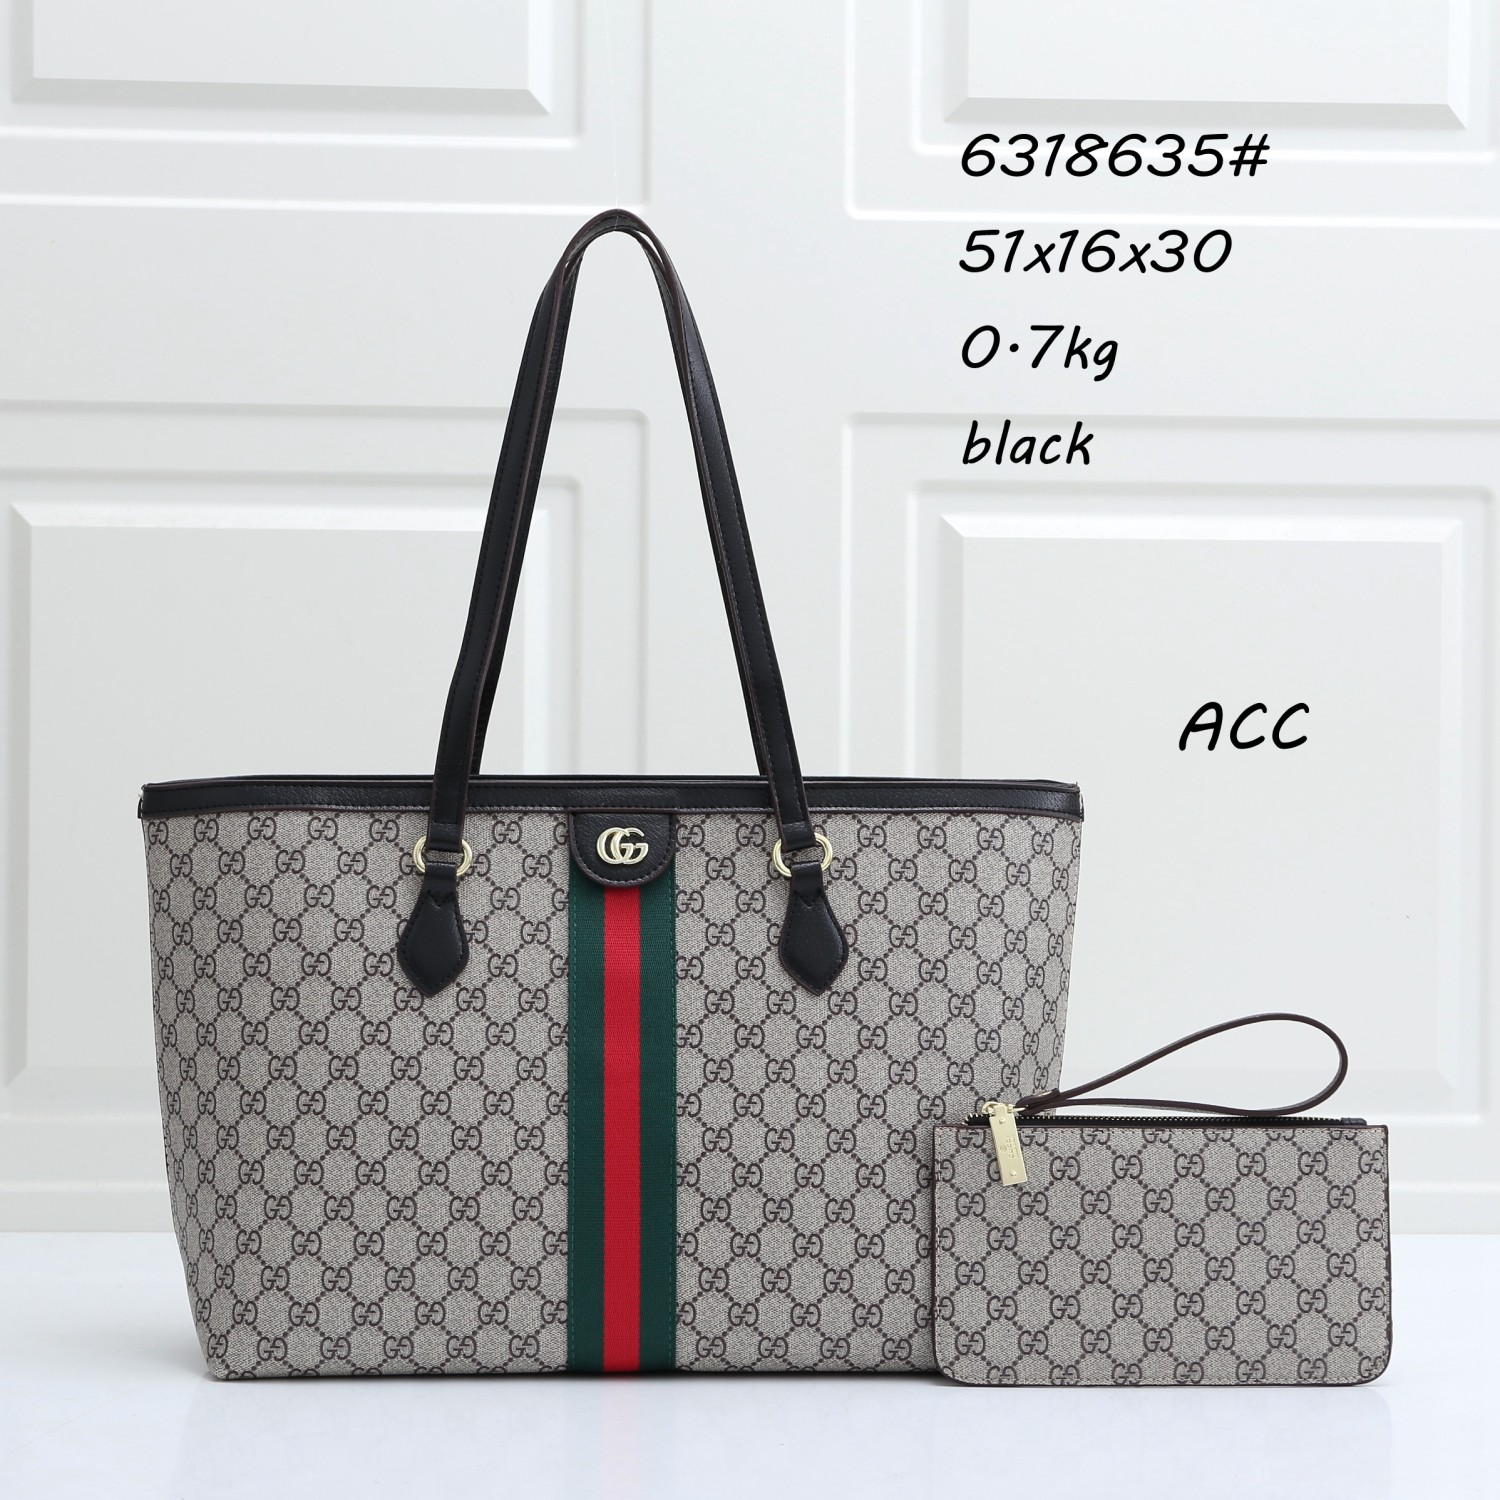 Replica LV Chanel Gucci coach celine Designer handbags